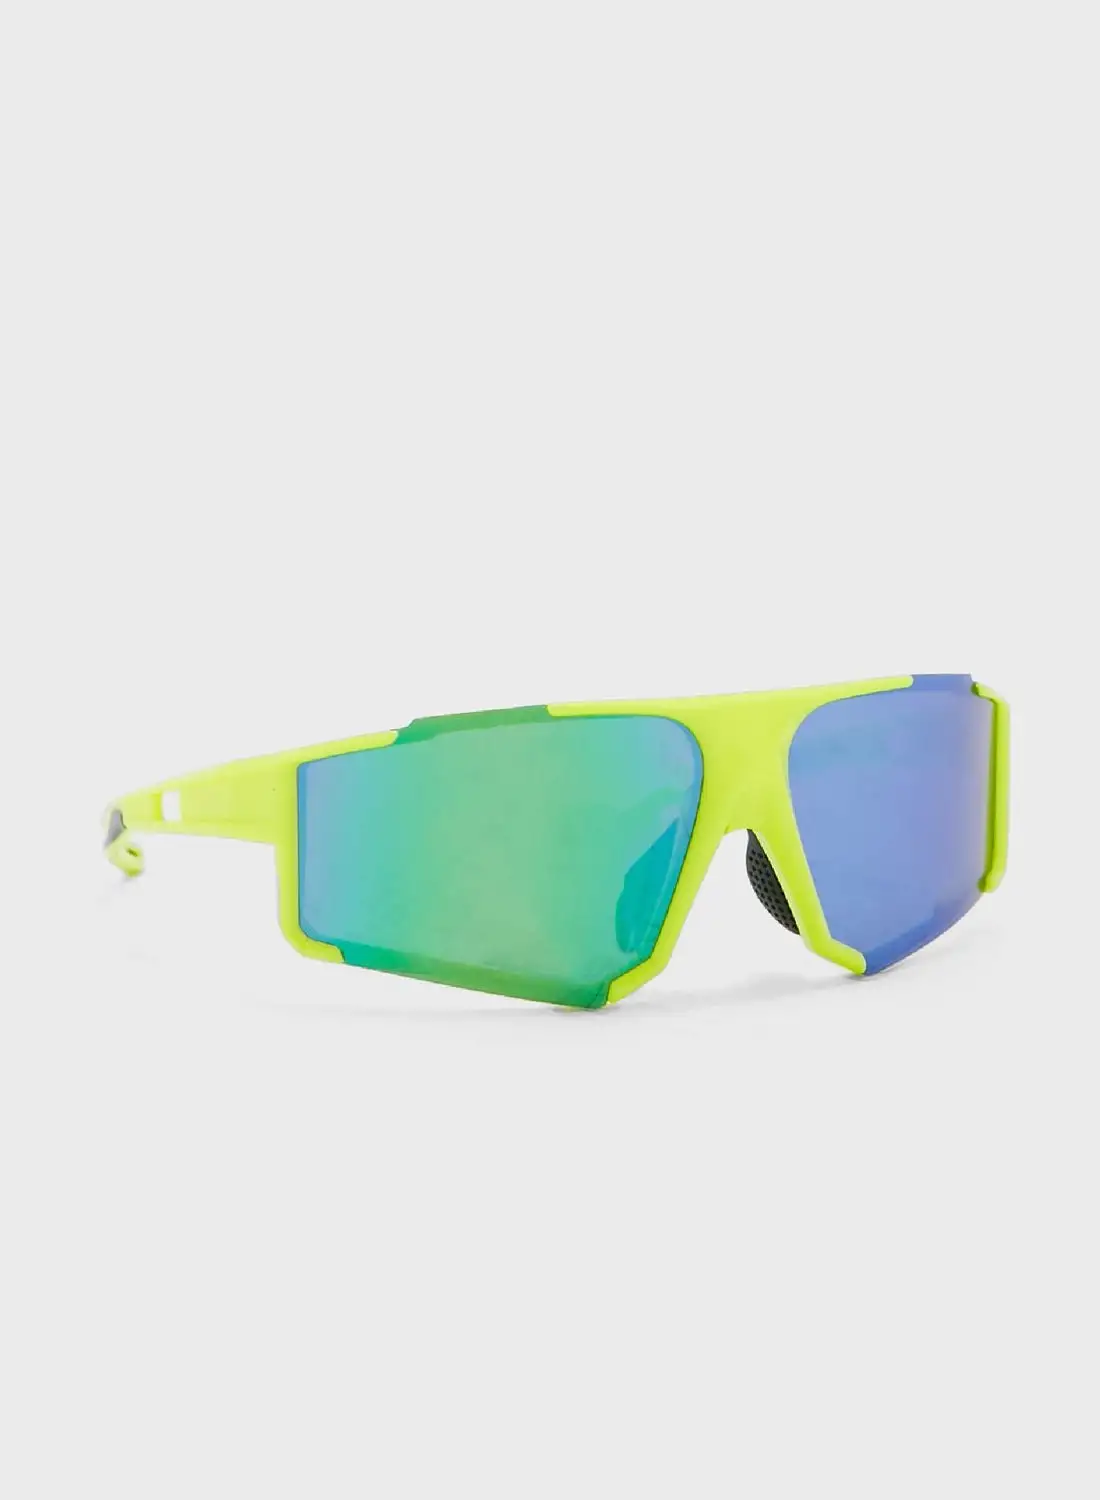 FRWD Polarized Sports Sunglasses